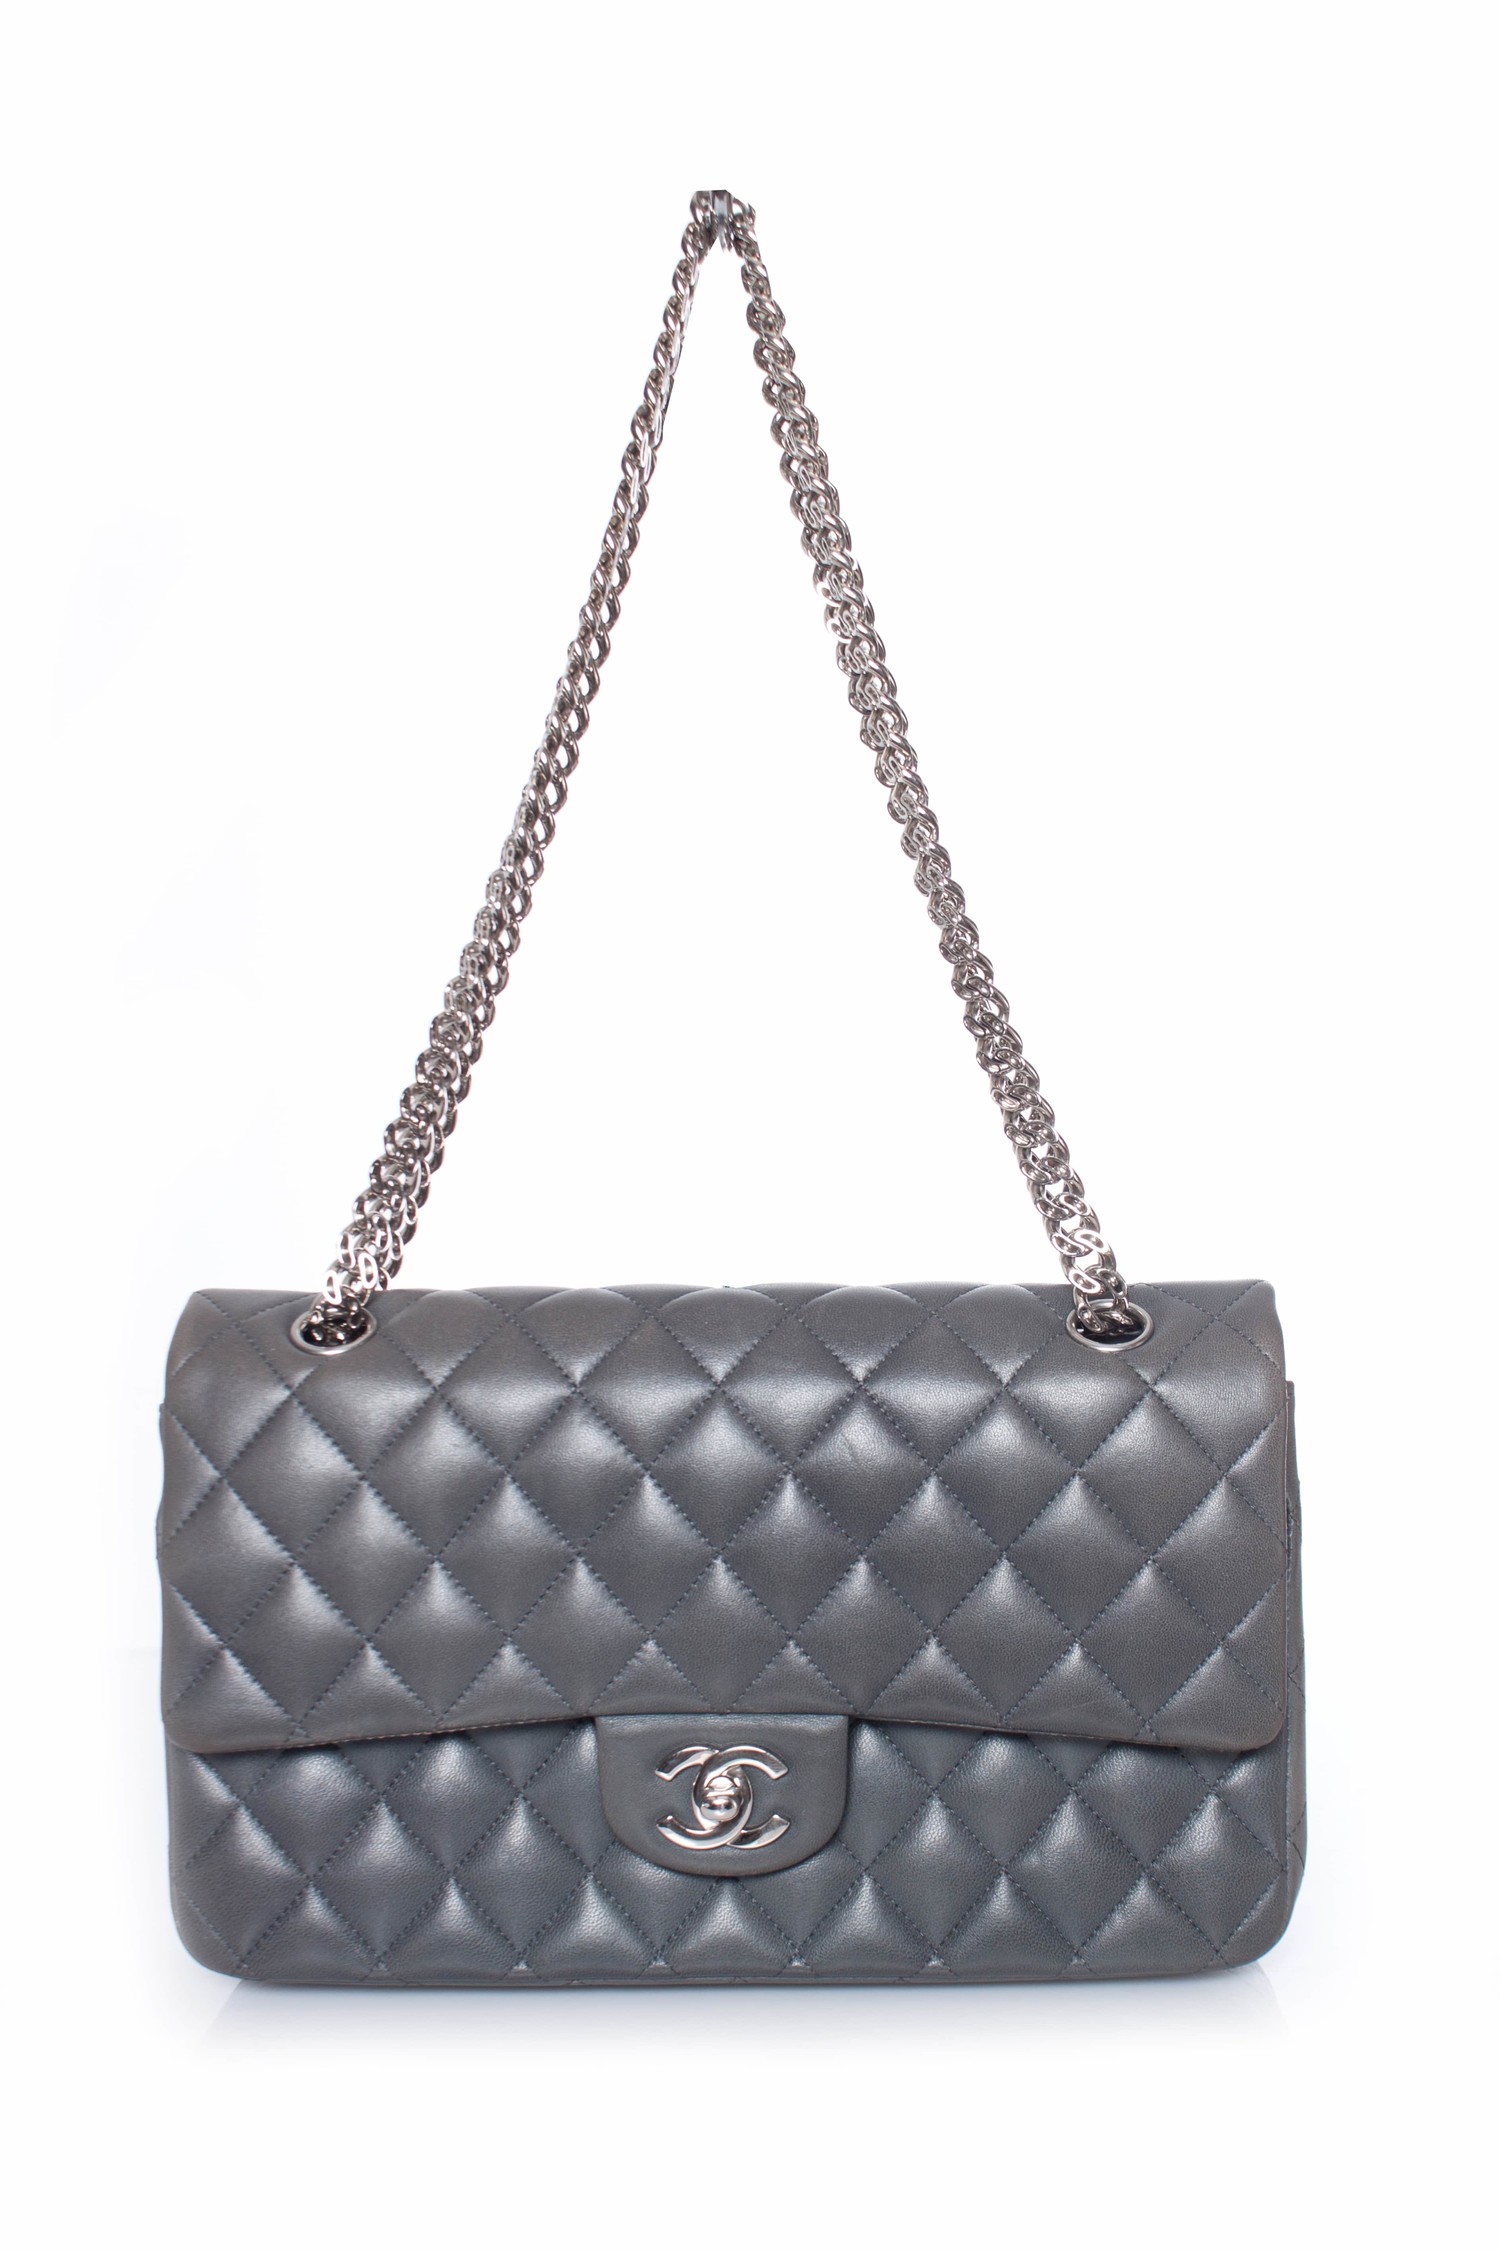 Chanel 22 Small Handbag Grey  Kaialux